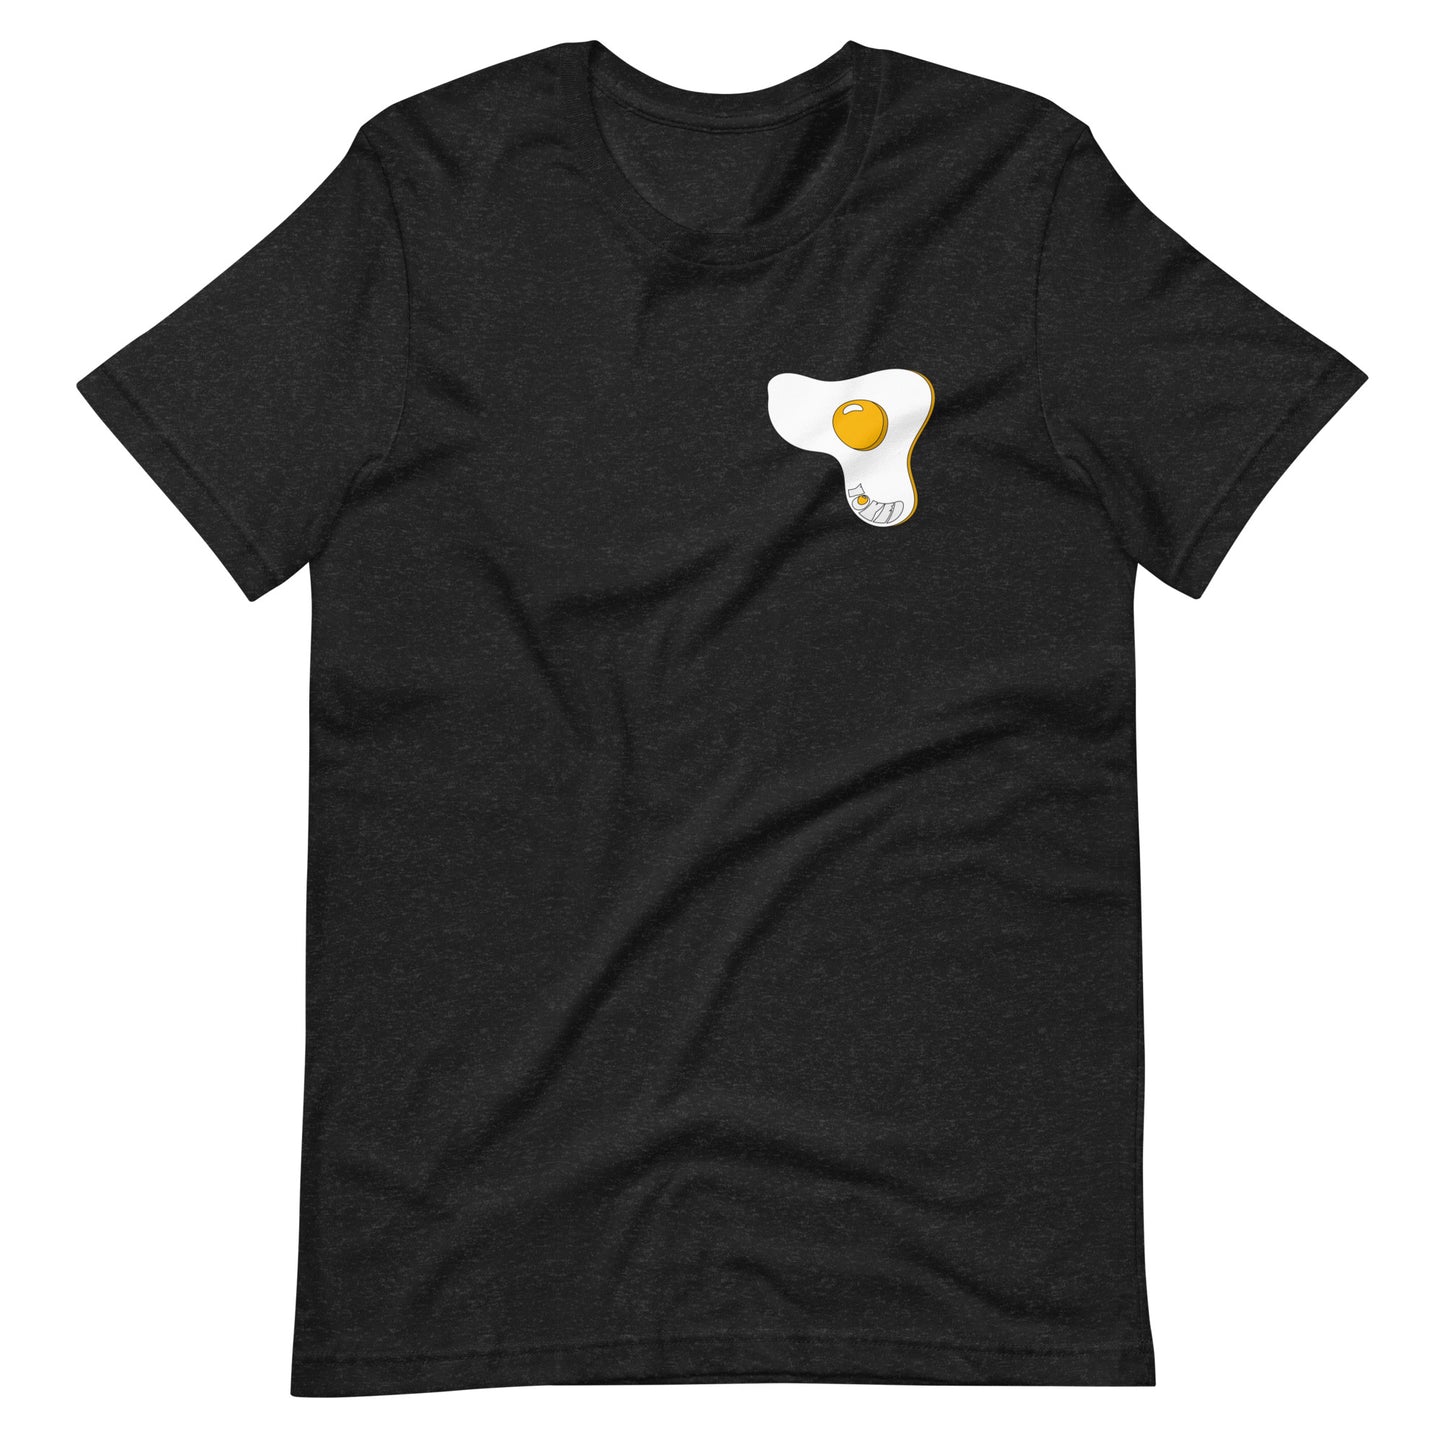 Texas Sized T-shirt